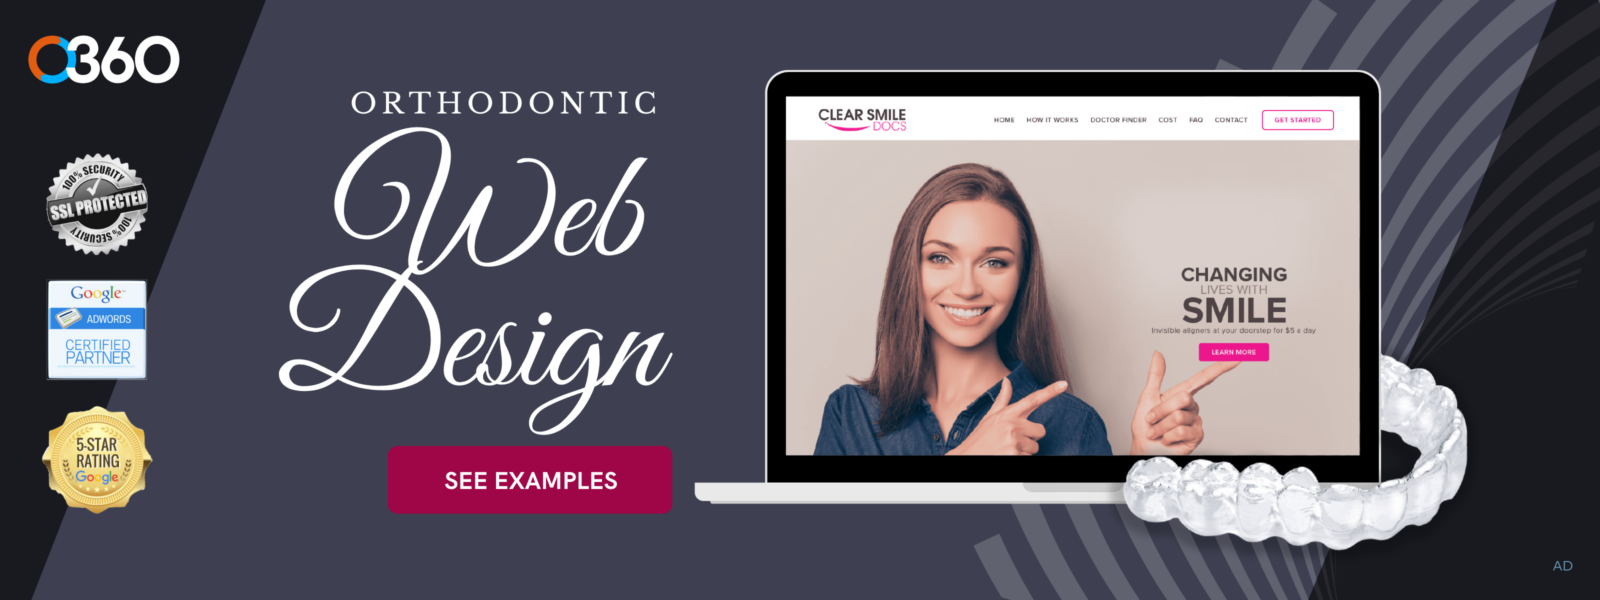 Orthodontic web design company